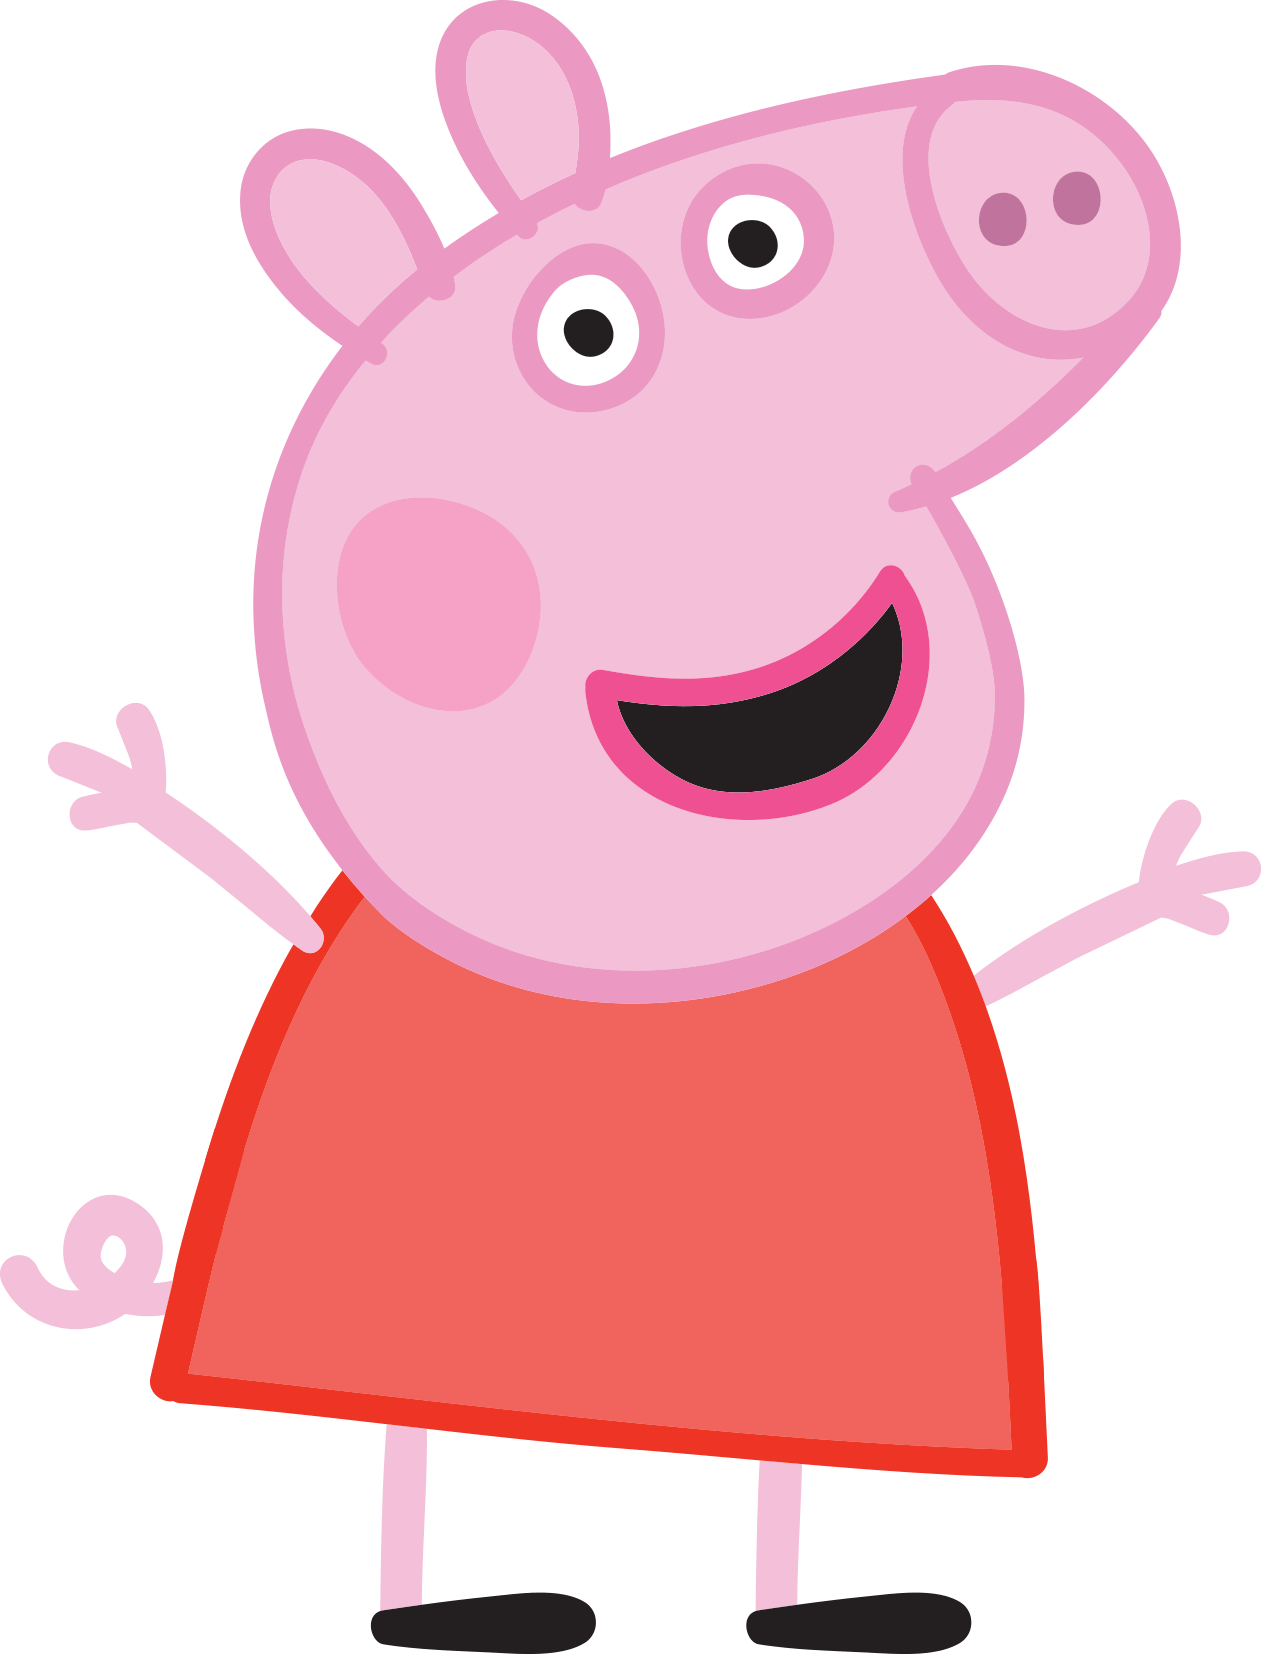 Peppa Pig Character Peppa Pig Wiki Fandom